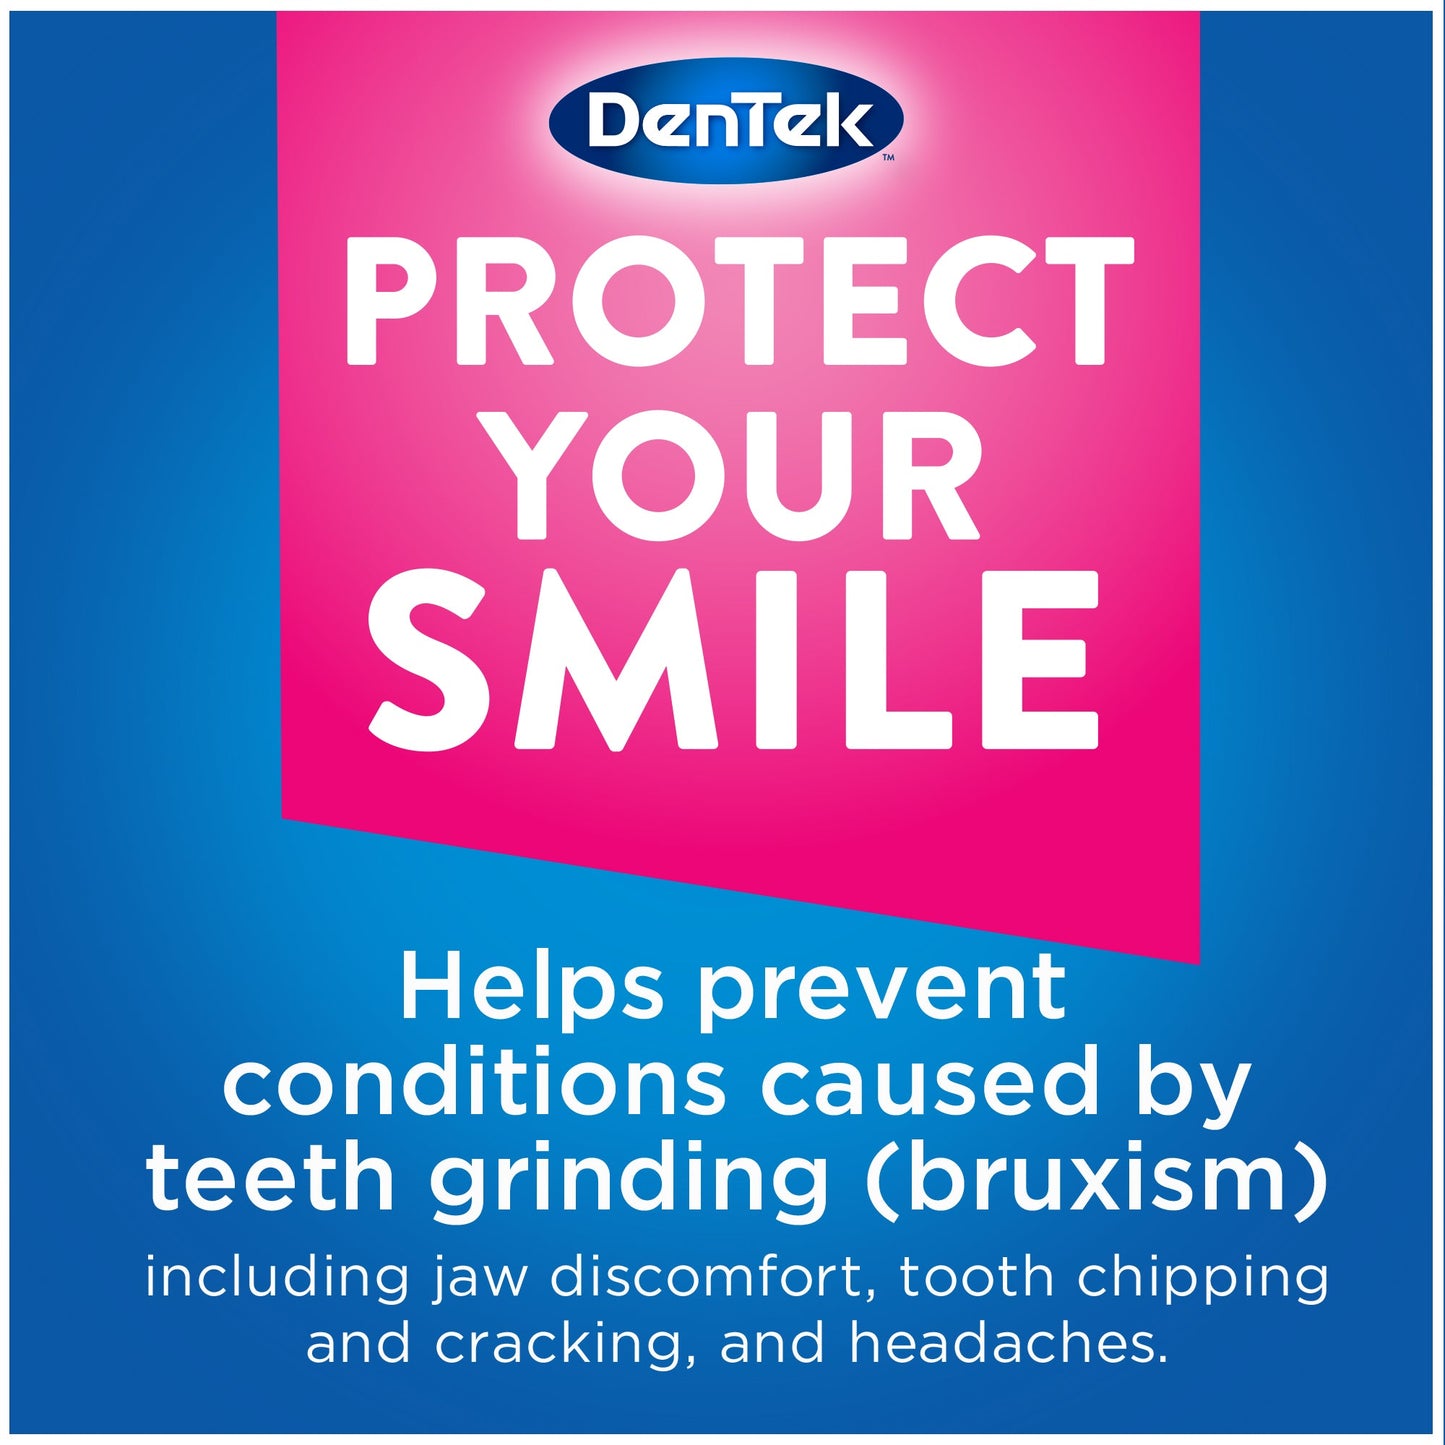 DenTek Comfort-Fit Dental Guards for Nighttime Teeth Grinding